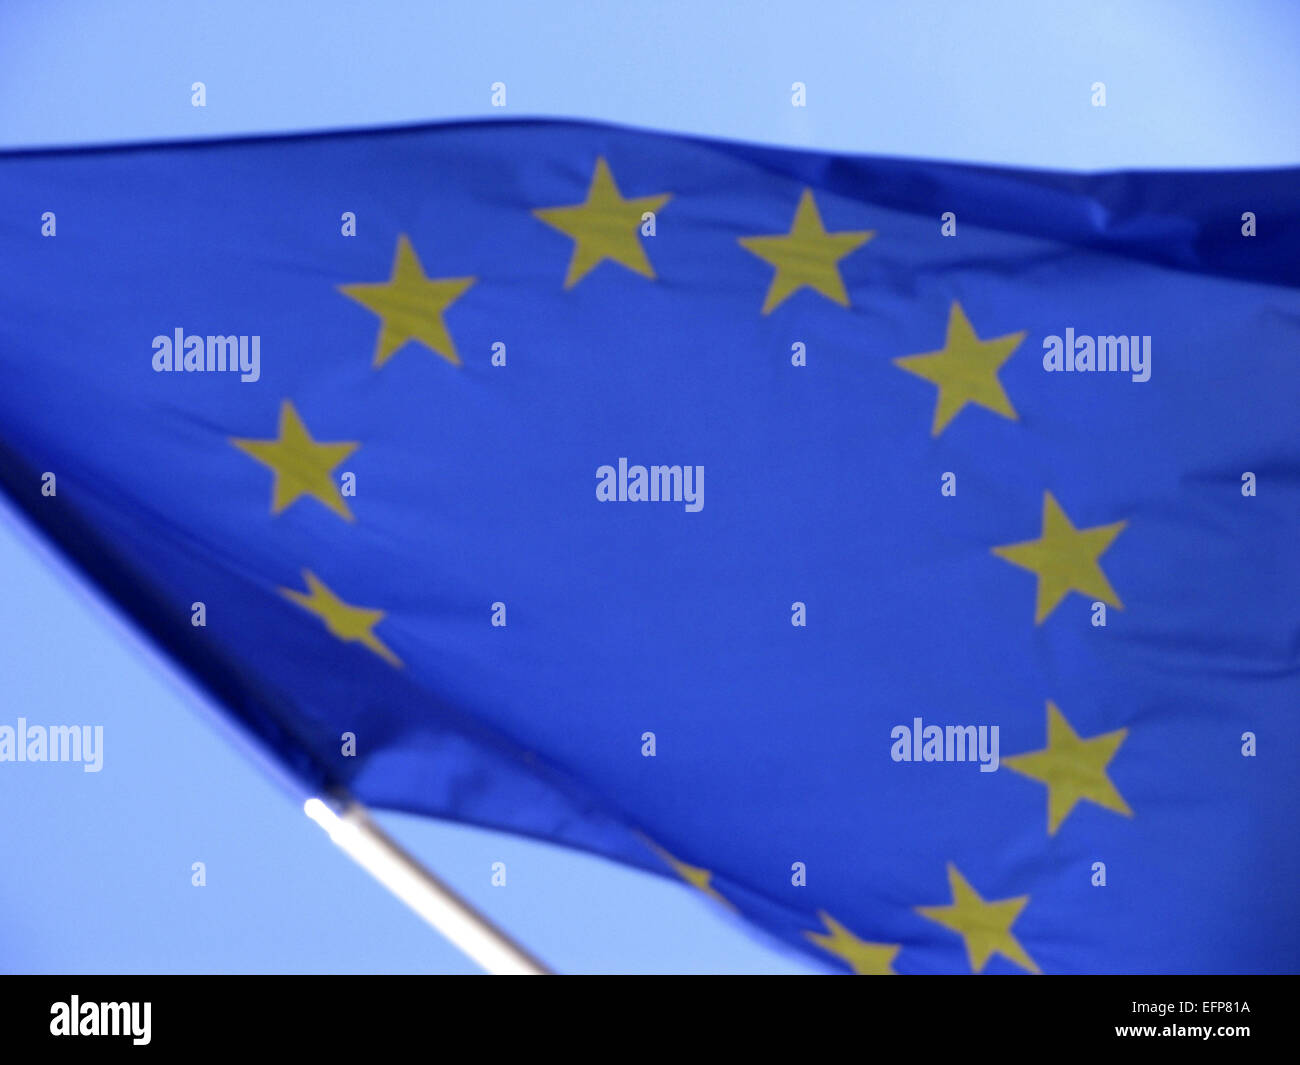 Europa Flagge Europaflagge Sachaufnahme Fahne Europaeisch Europafahne Europa-Europa-flagge fahne Wehen Wind ue Europaeische Unio Foto de stock